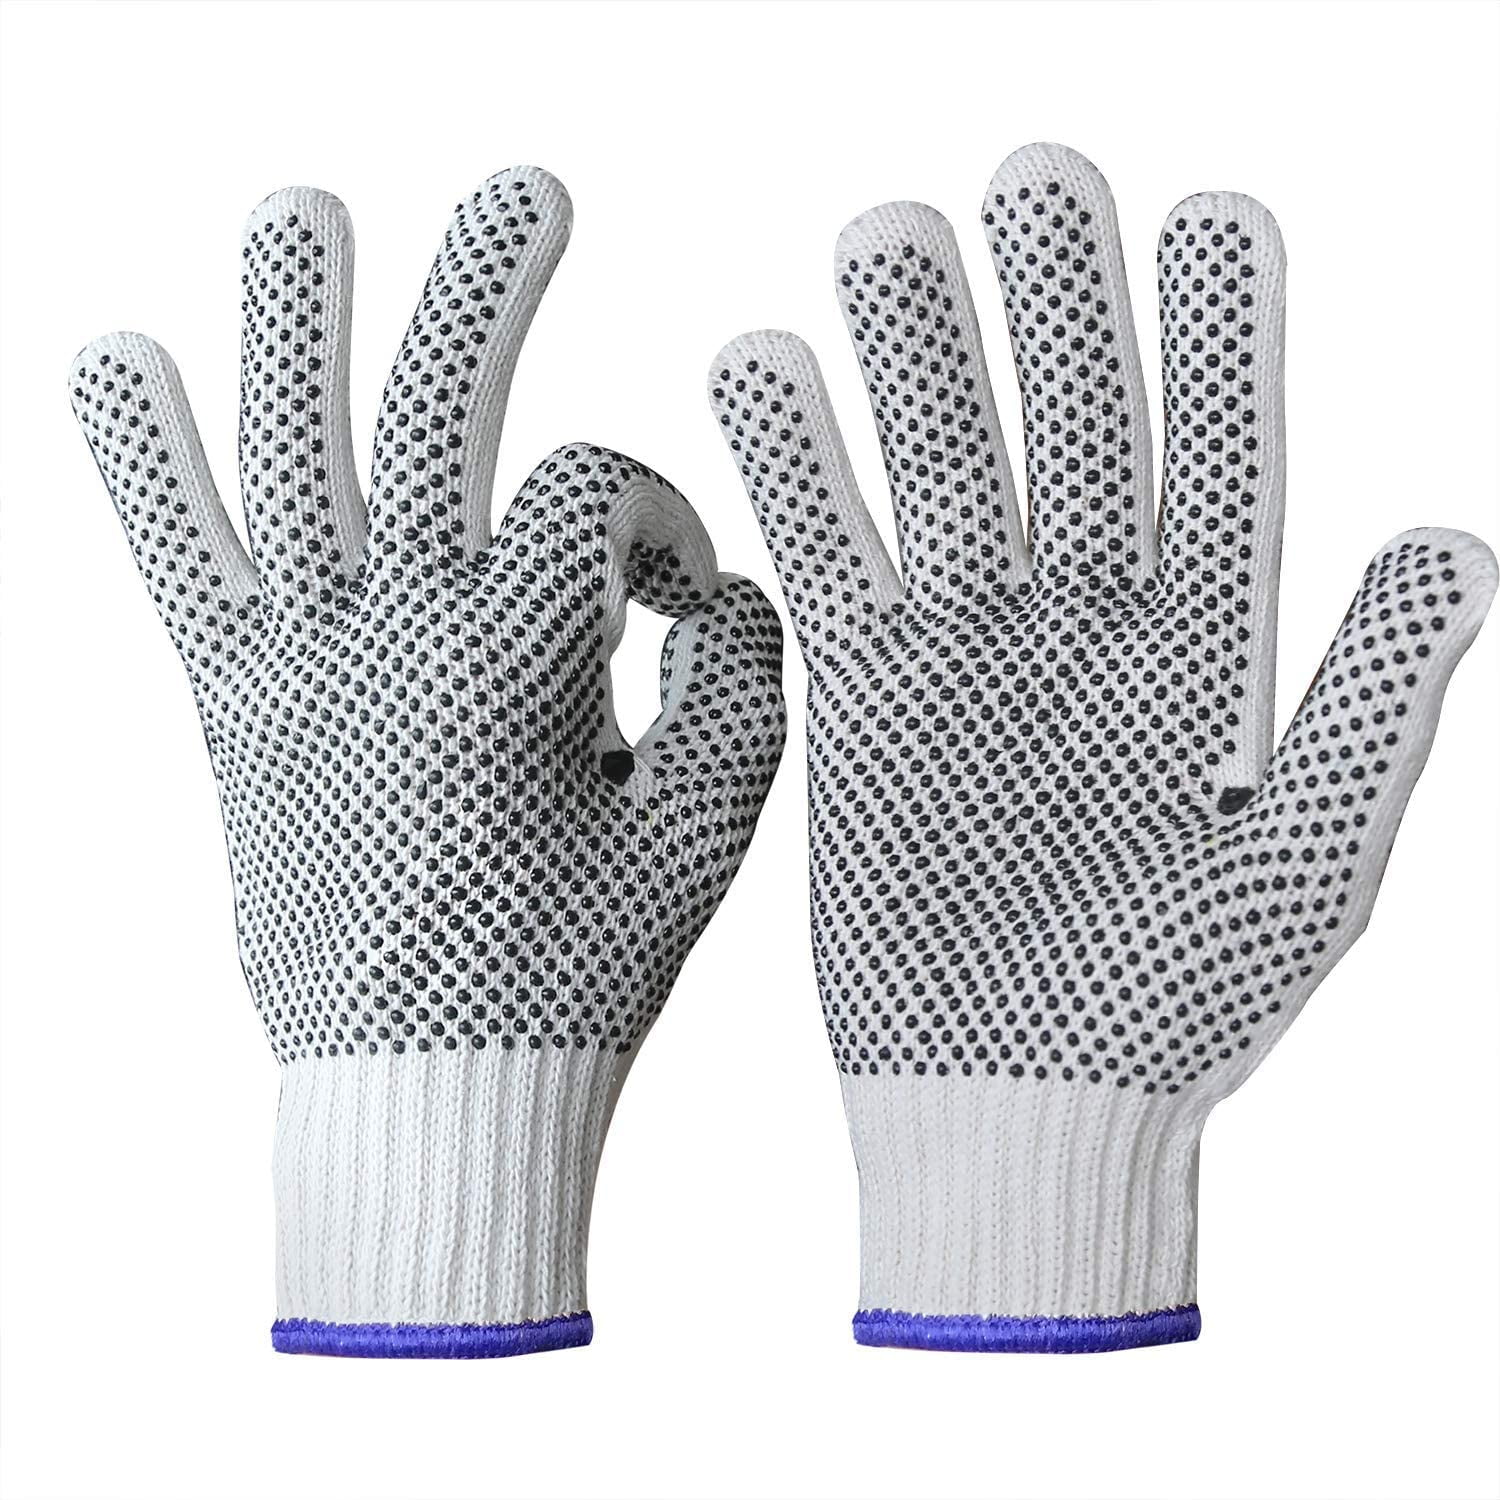 Перчатки хлопок пвх. Перчатки для стройки. Перчатка для стройка. Working Gloves. Work Cotton Gloves.